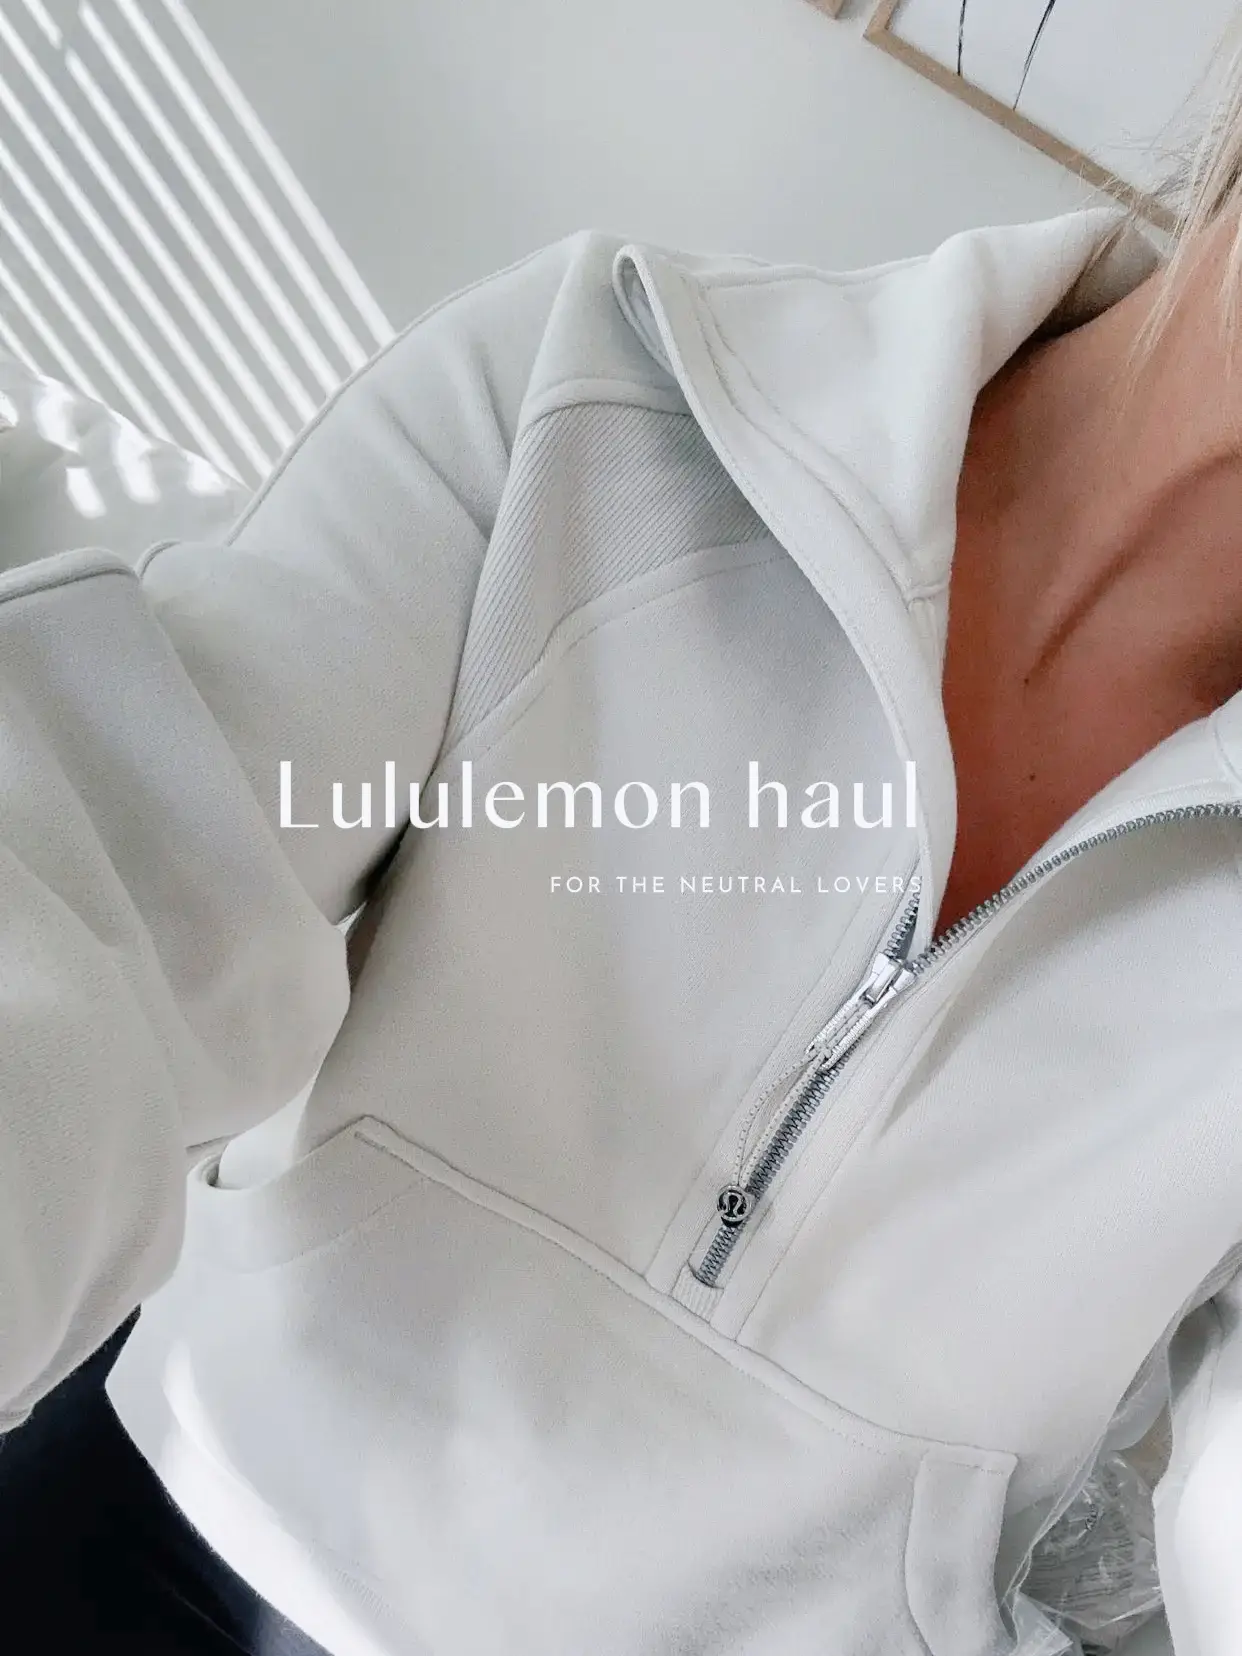 lip gloss scuba dropping tomorrow! #lululemon #lululemoncreator #lulul